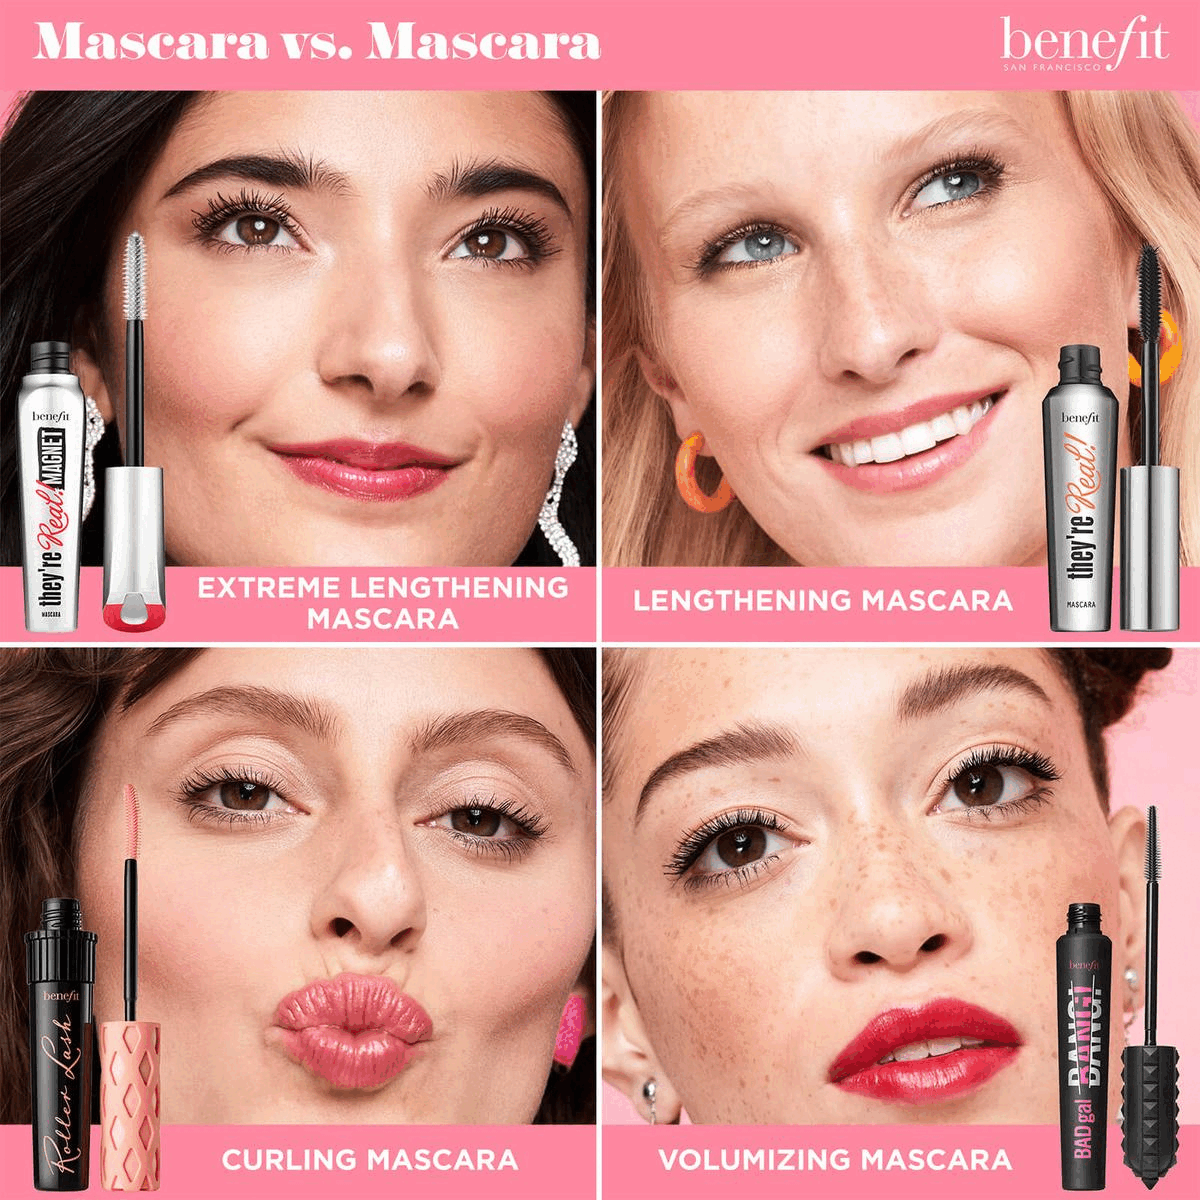 Mascara VS Mascara. They're real magnet